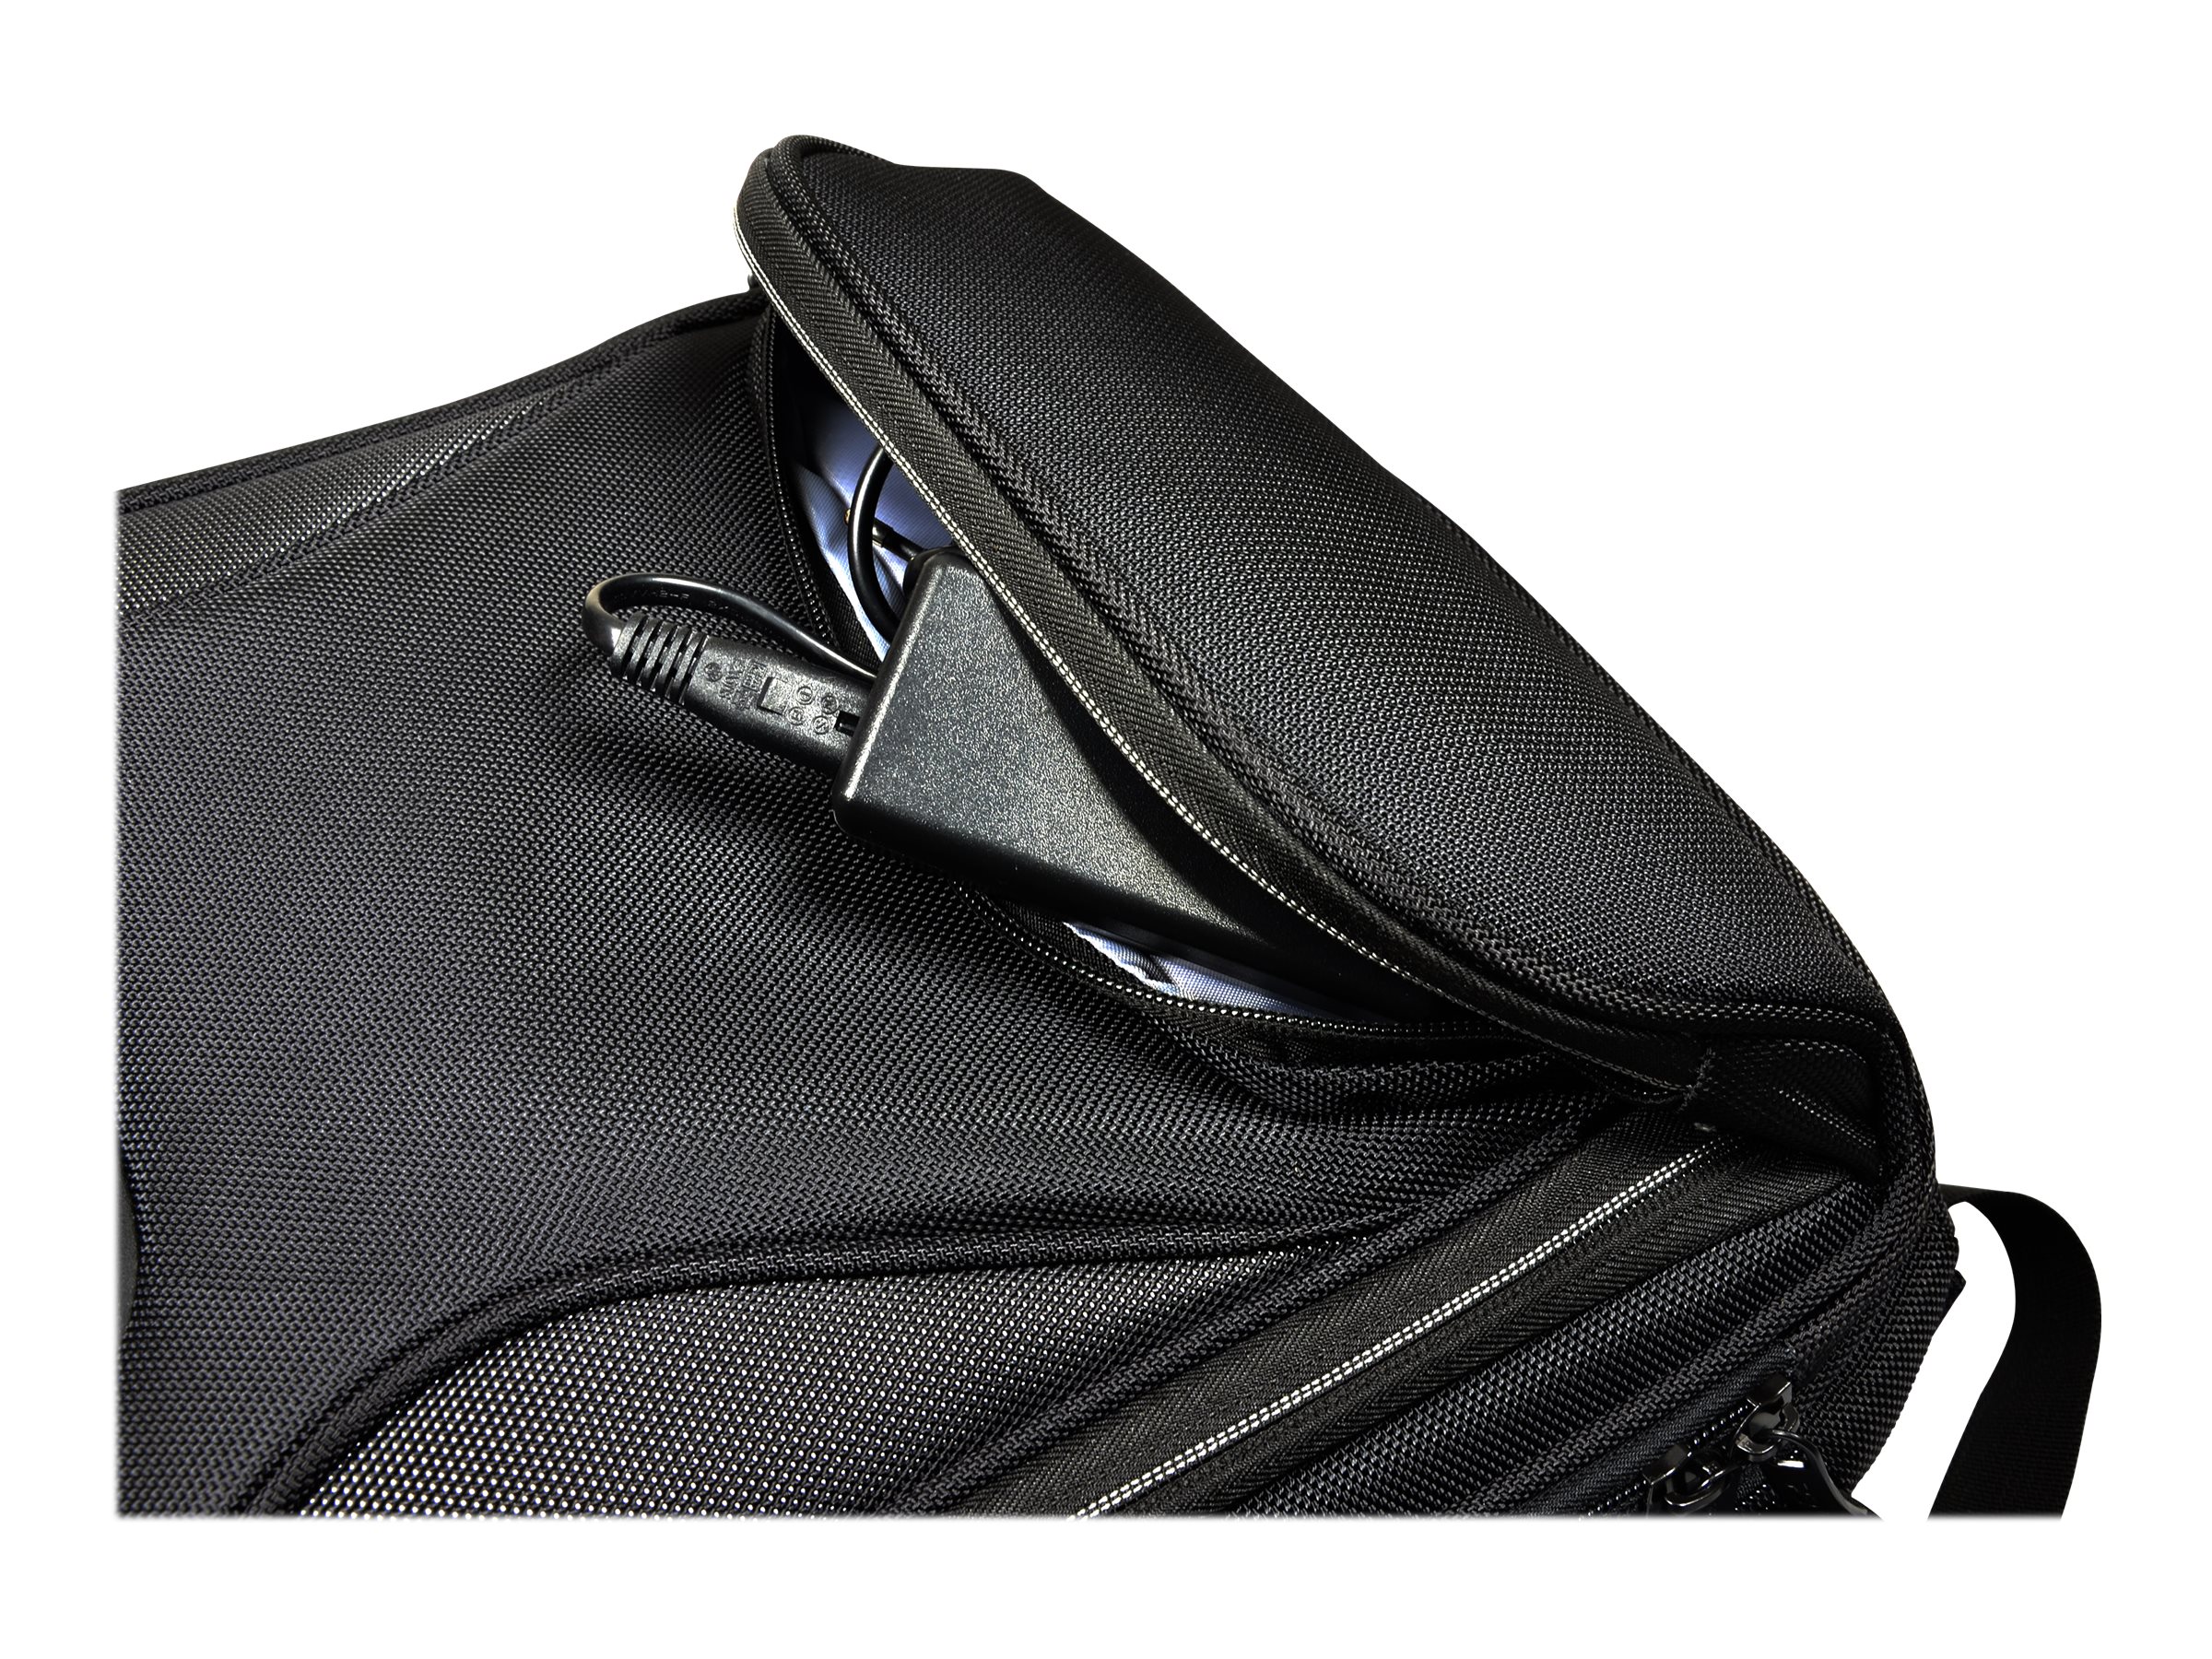 PORT Manhattan - Sac à dos pour ordinateur portable - 14" - noir - 170230 - Sacoches pour ordinateur portable